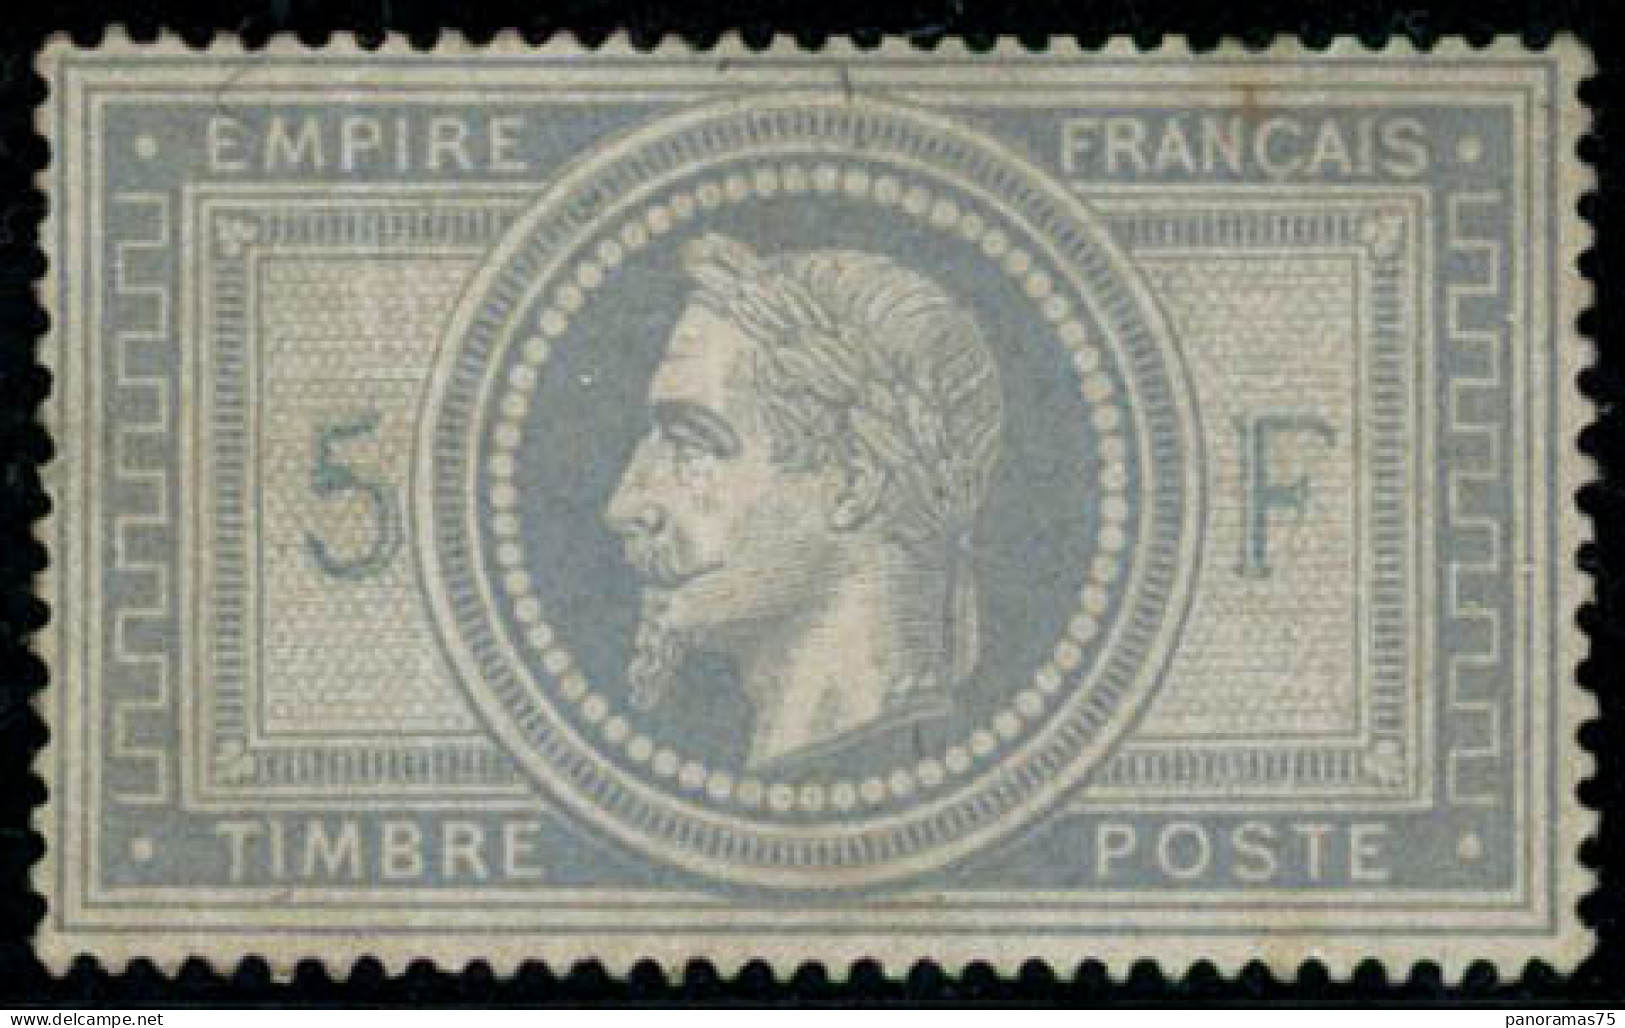 ** N°33 5F Empire, Quelques Froissures De Gomme, Qualité Standard - B - 1863-1870 Napoleon III With Laurels